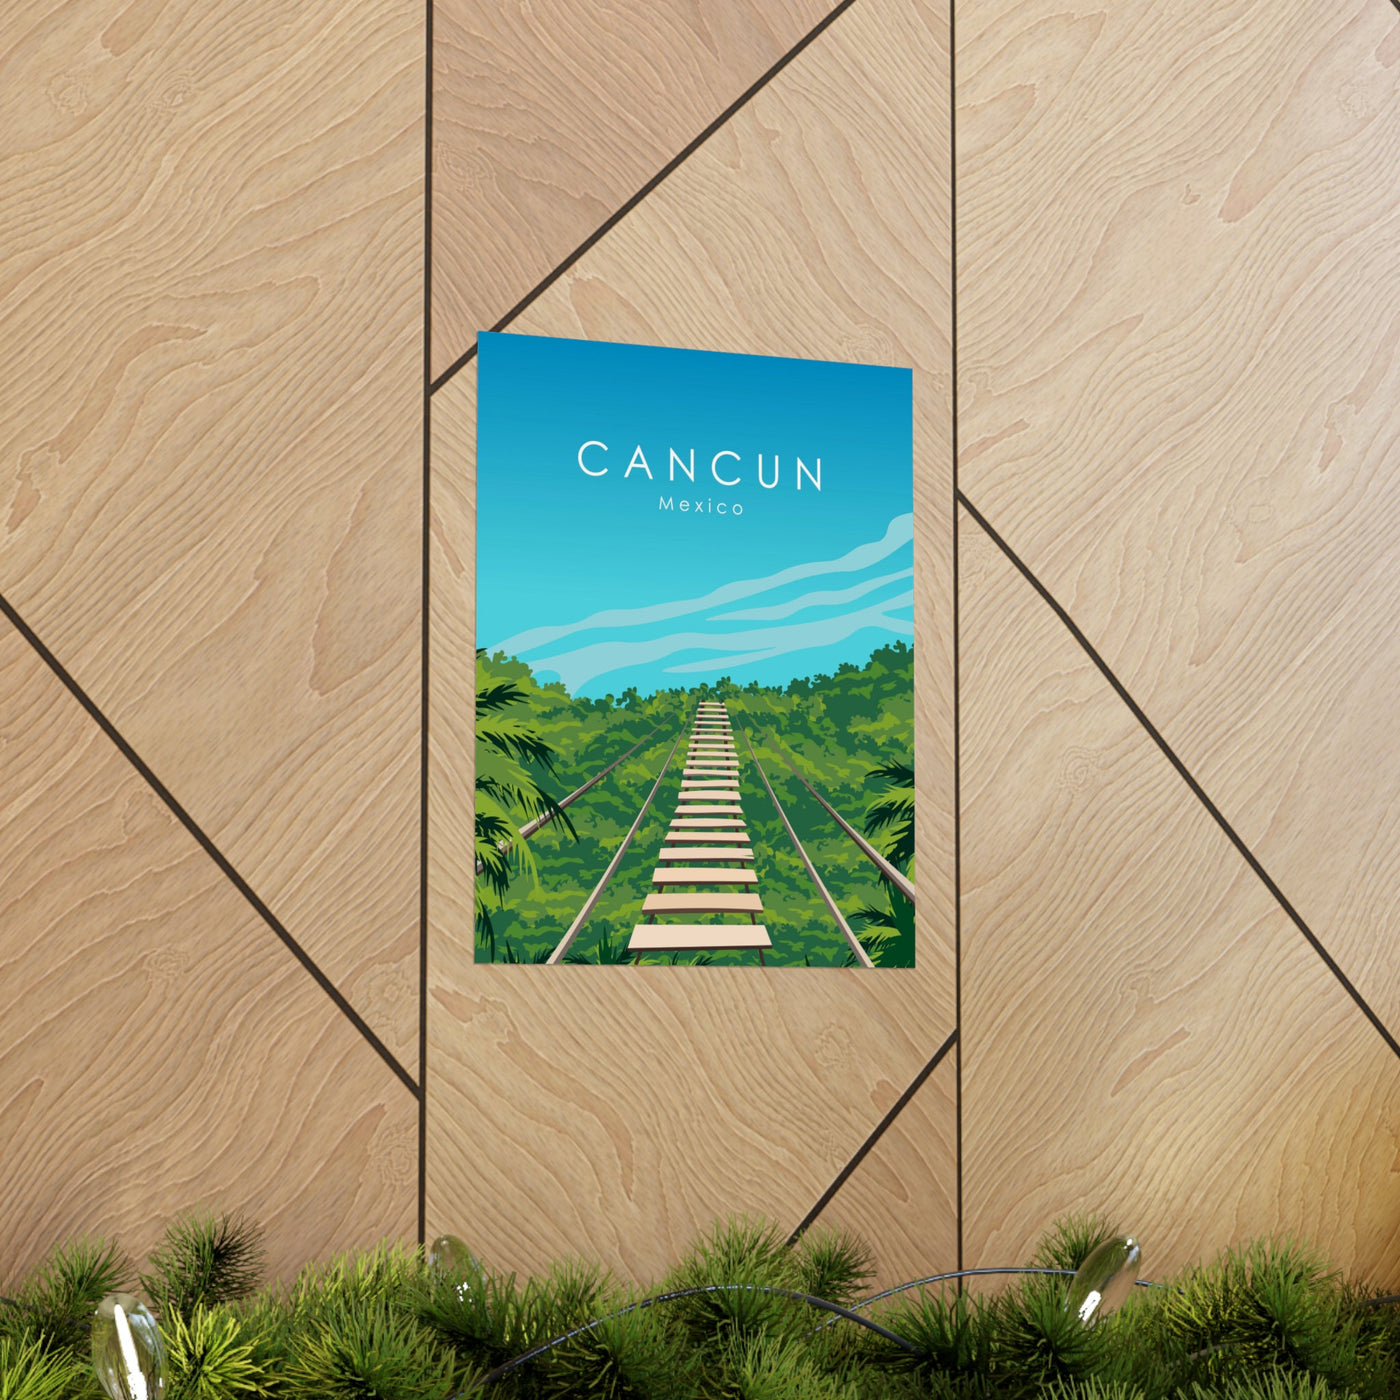 Cancun Mexico Travel Poster - Ezra's Clothing